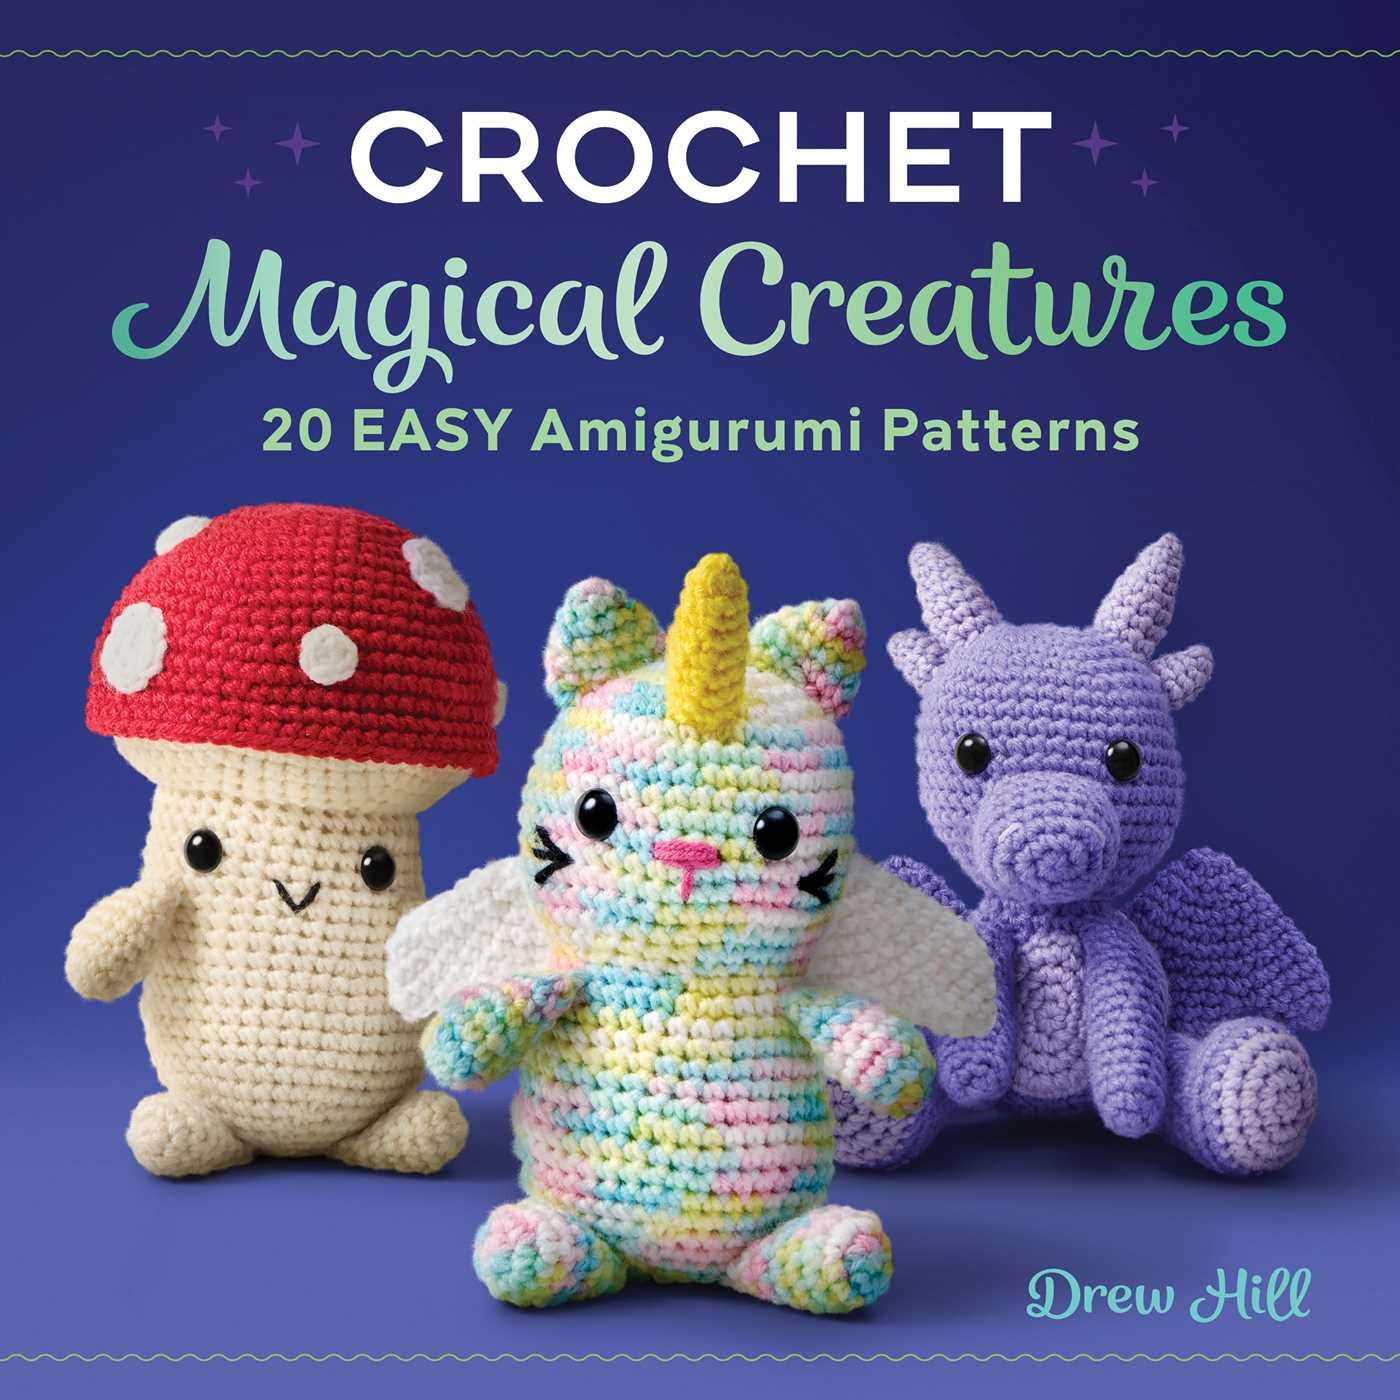 Book Crochet Magical Creatures: 20 Easy Amigurumi Patterns 